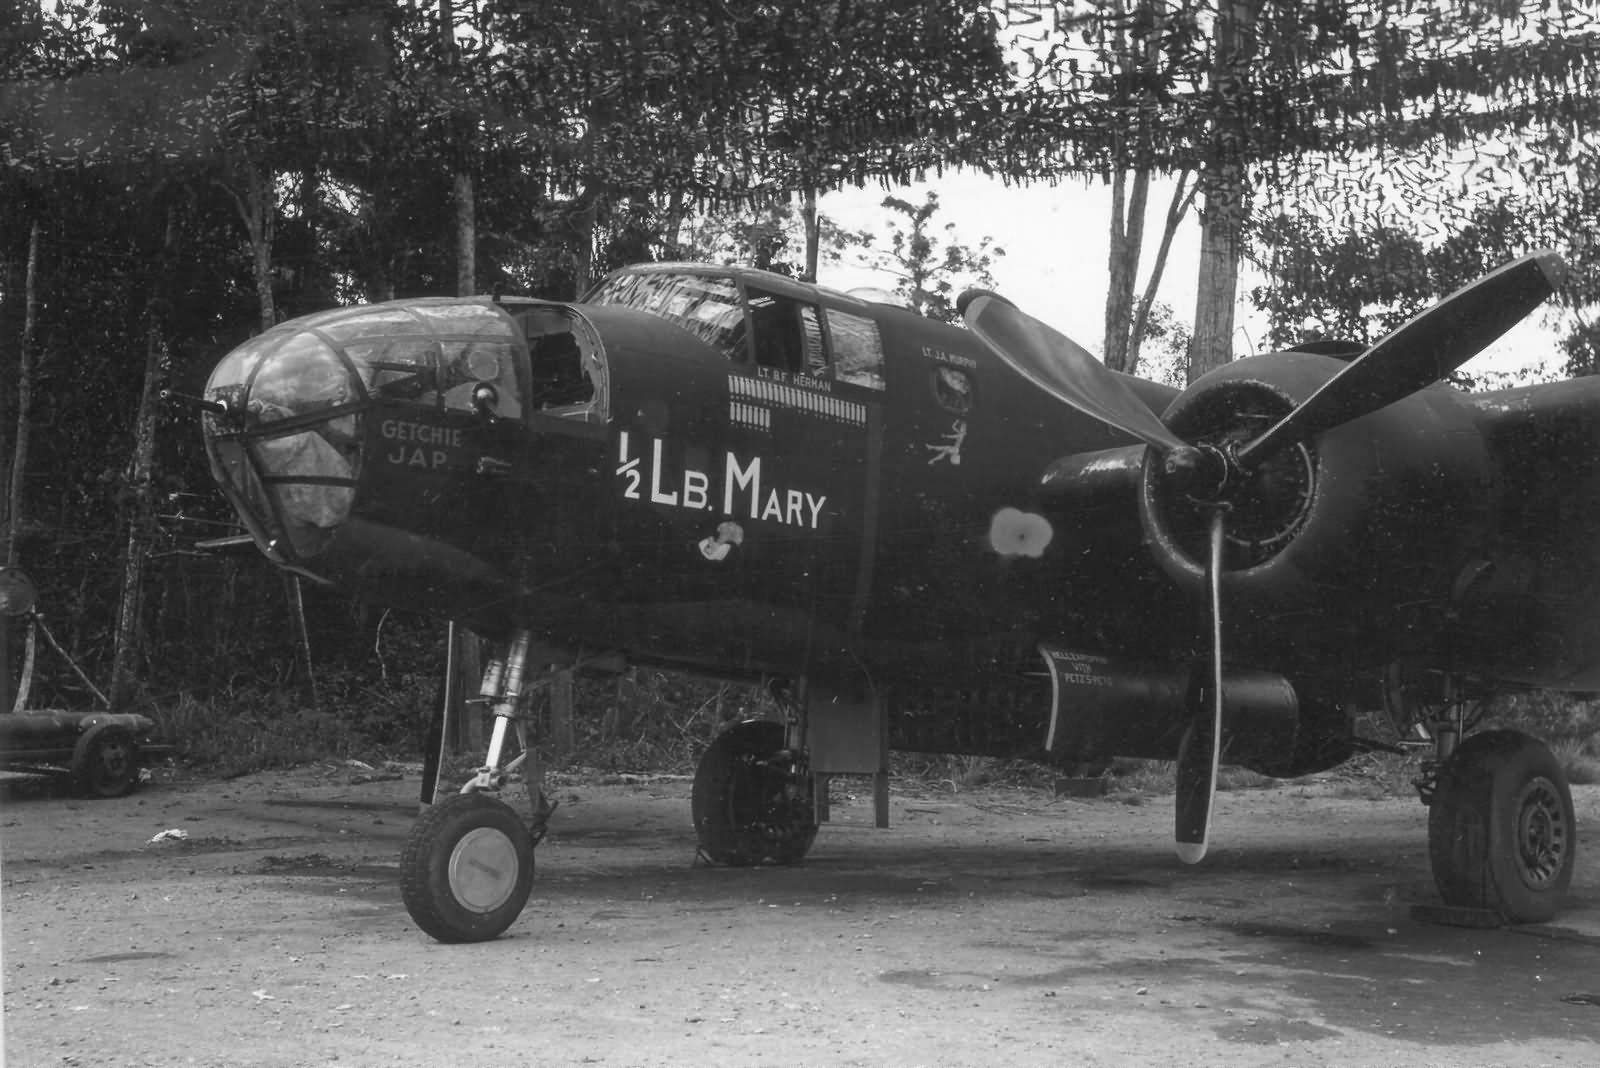 B-25_38_Bomb_Group_1942_1-2_lb_Mary_nose_art.jpg